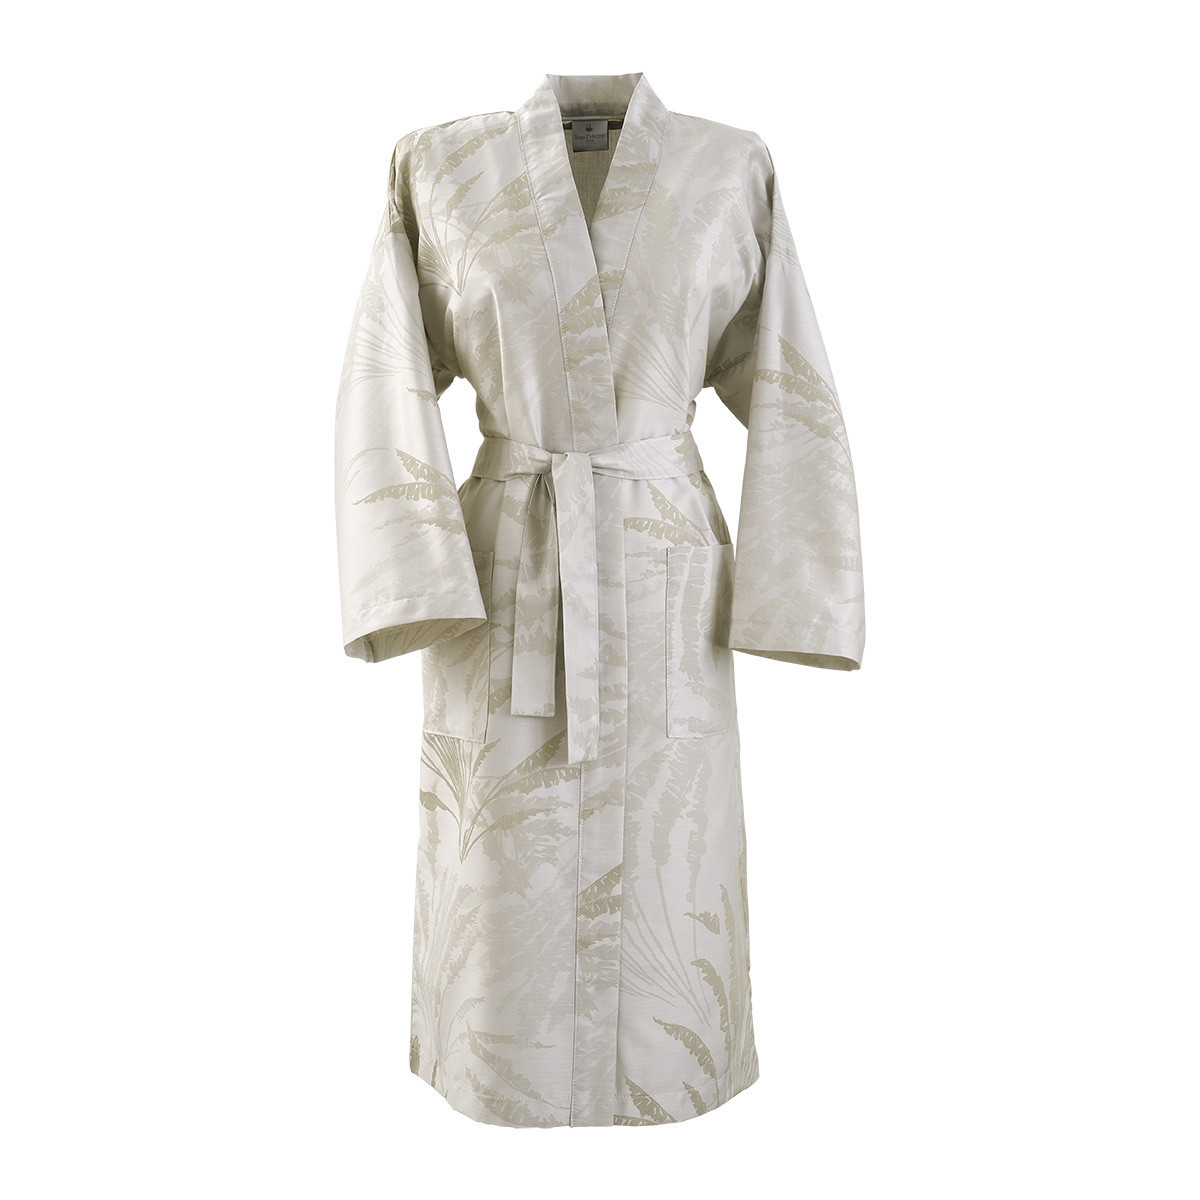 халат кимоно Yves Delorme Palmea - купить в магазине Yves Delorme Russia